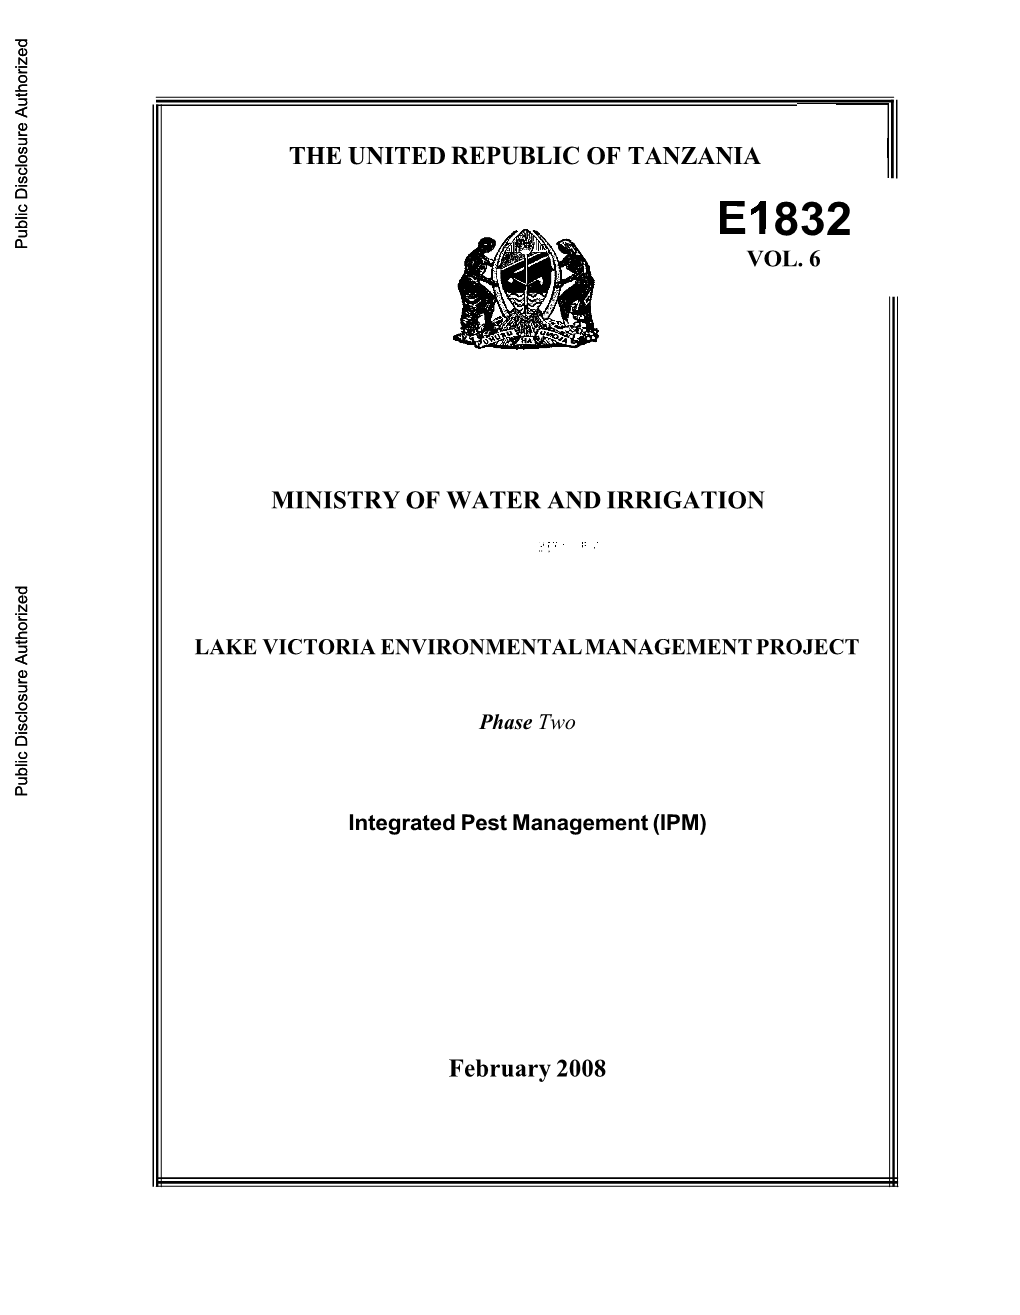 THE UNITED REPUBLIC of TANZANIA -L El832 Public Disclosure Authorized VOL